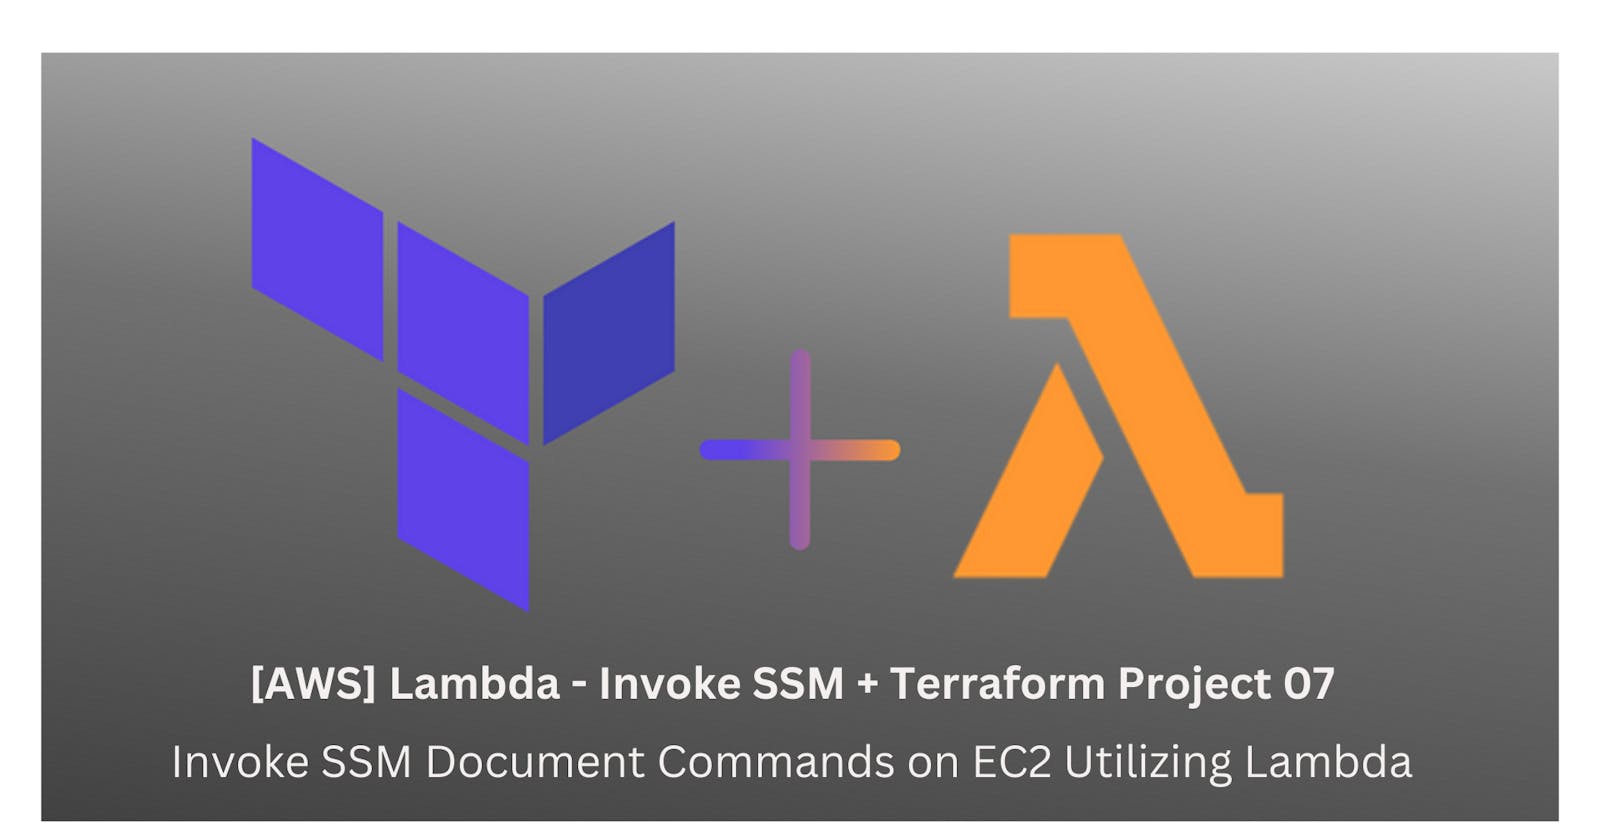 [AWS] Lambda - Invoke SSM + Terraform Project 07